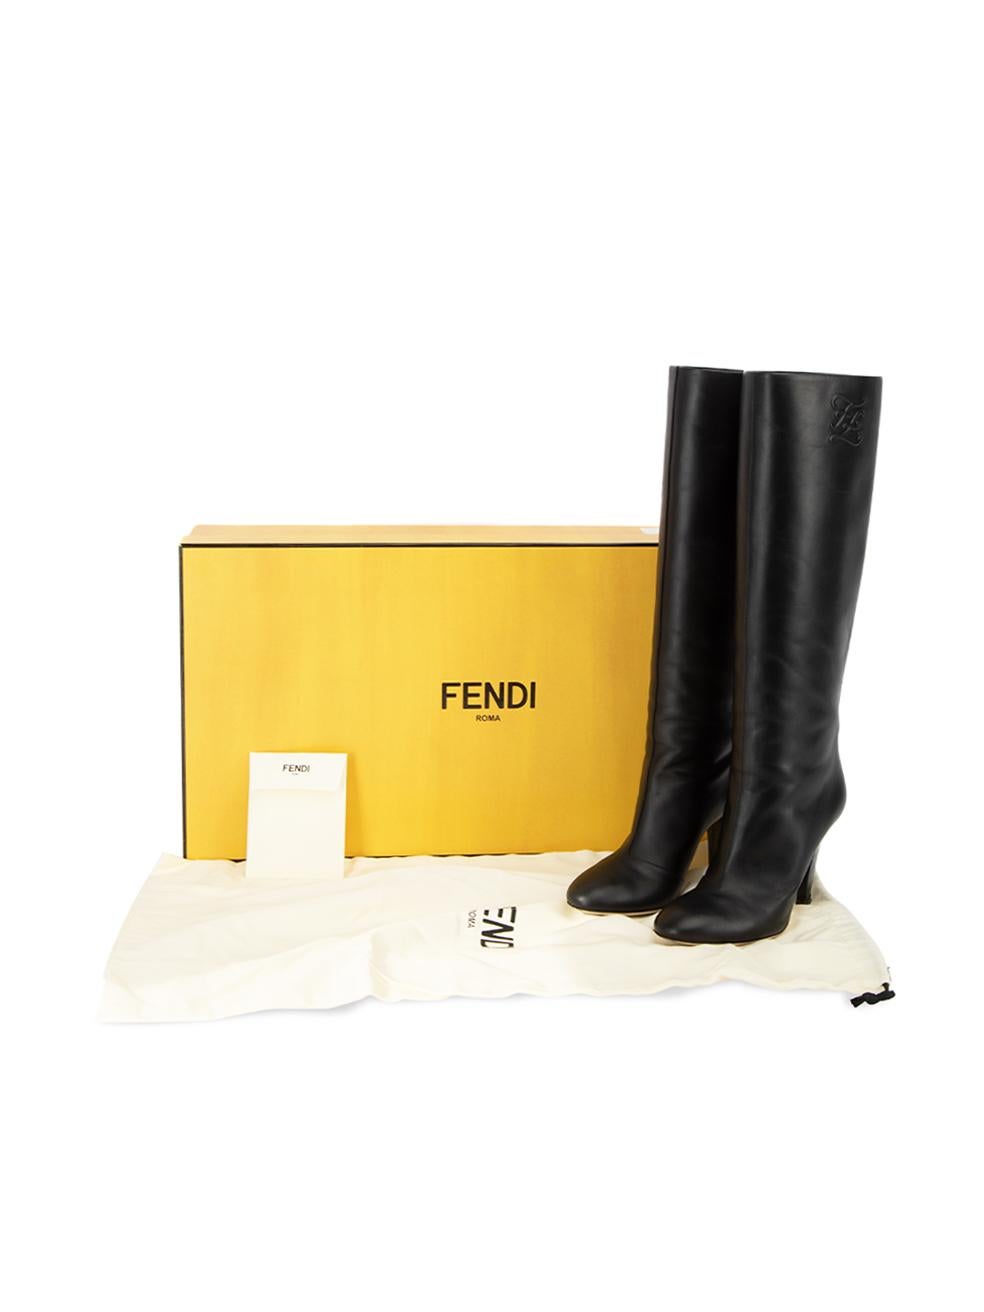 Fendi Women's Black Leather Karligraphy Knee High Boots 1